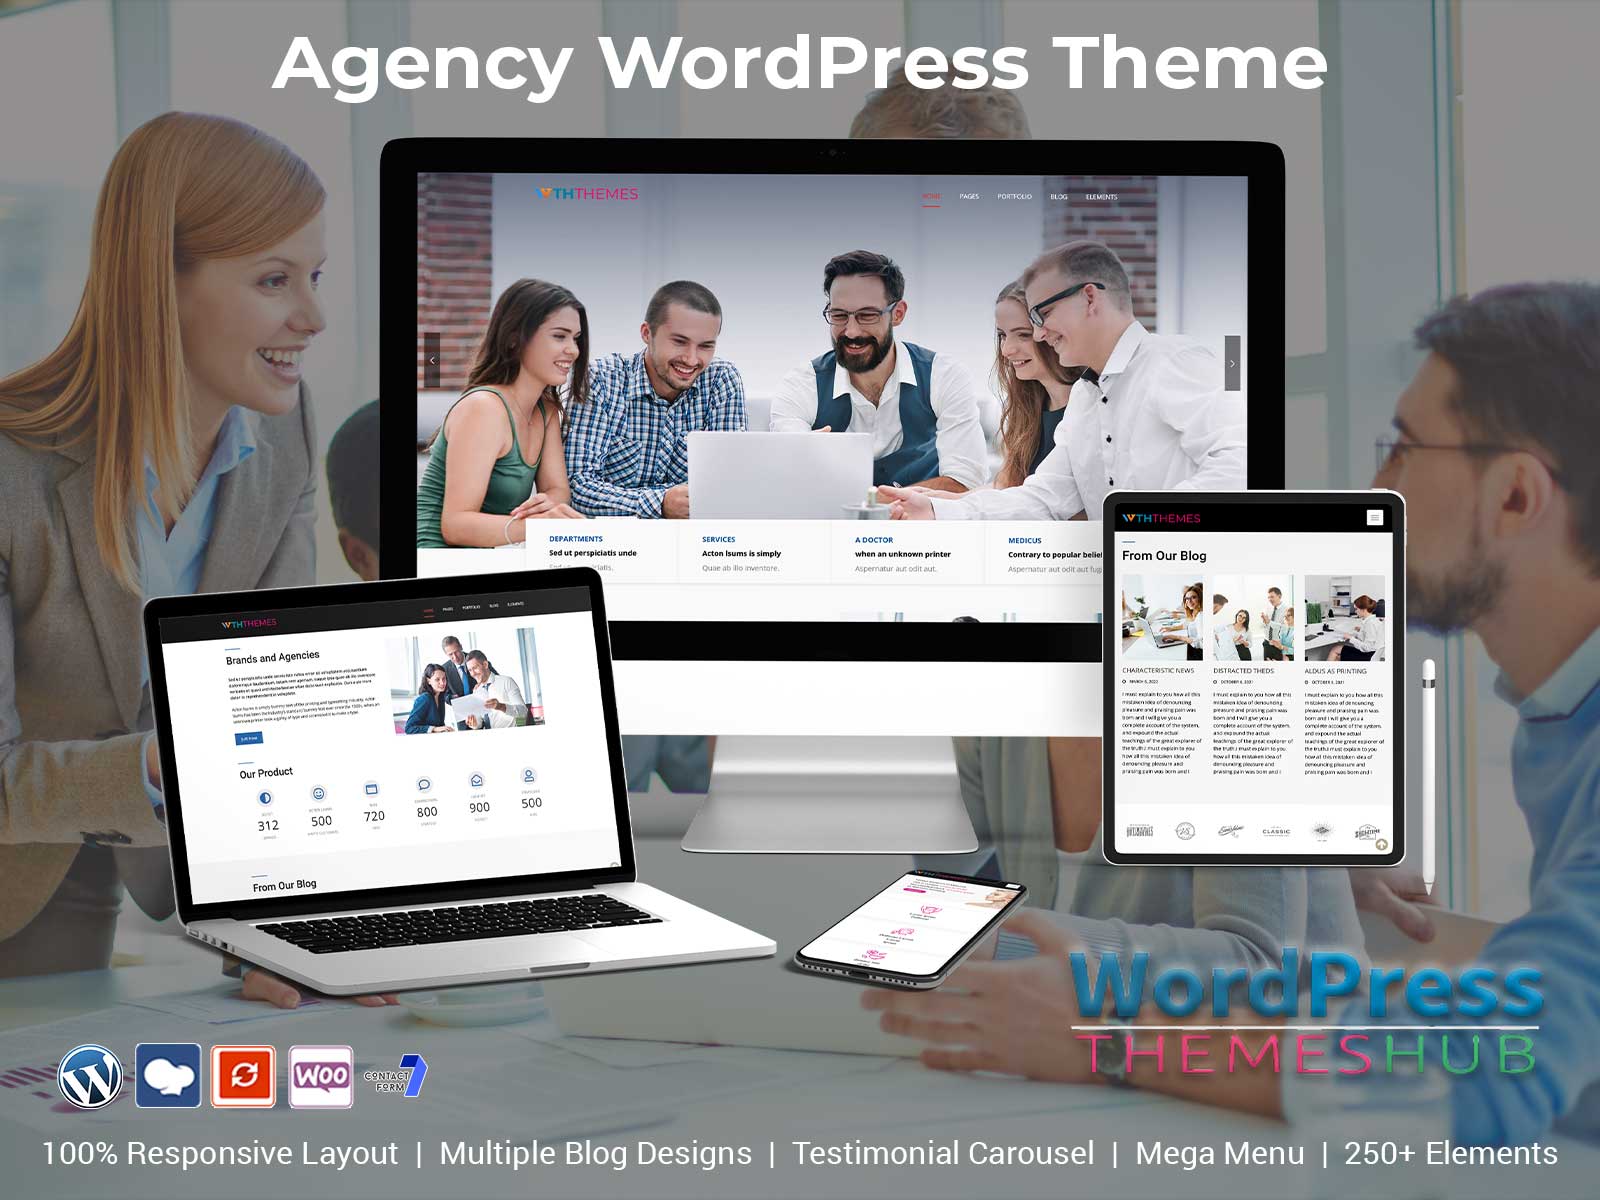 Best Agency WordPress Theme For Agency Website